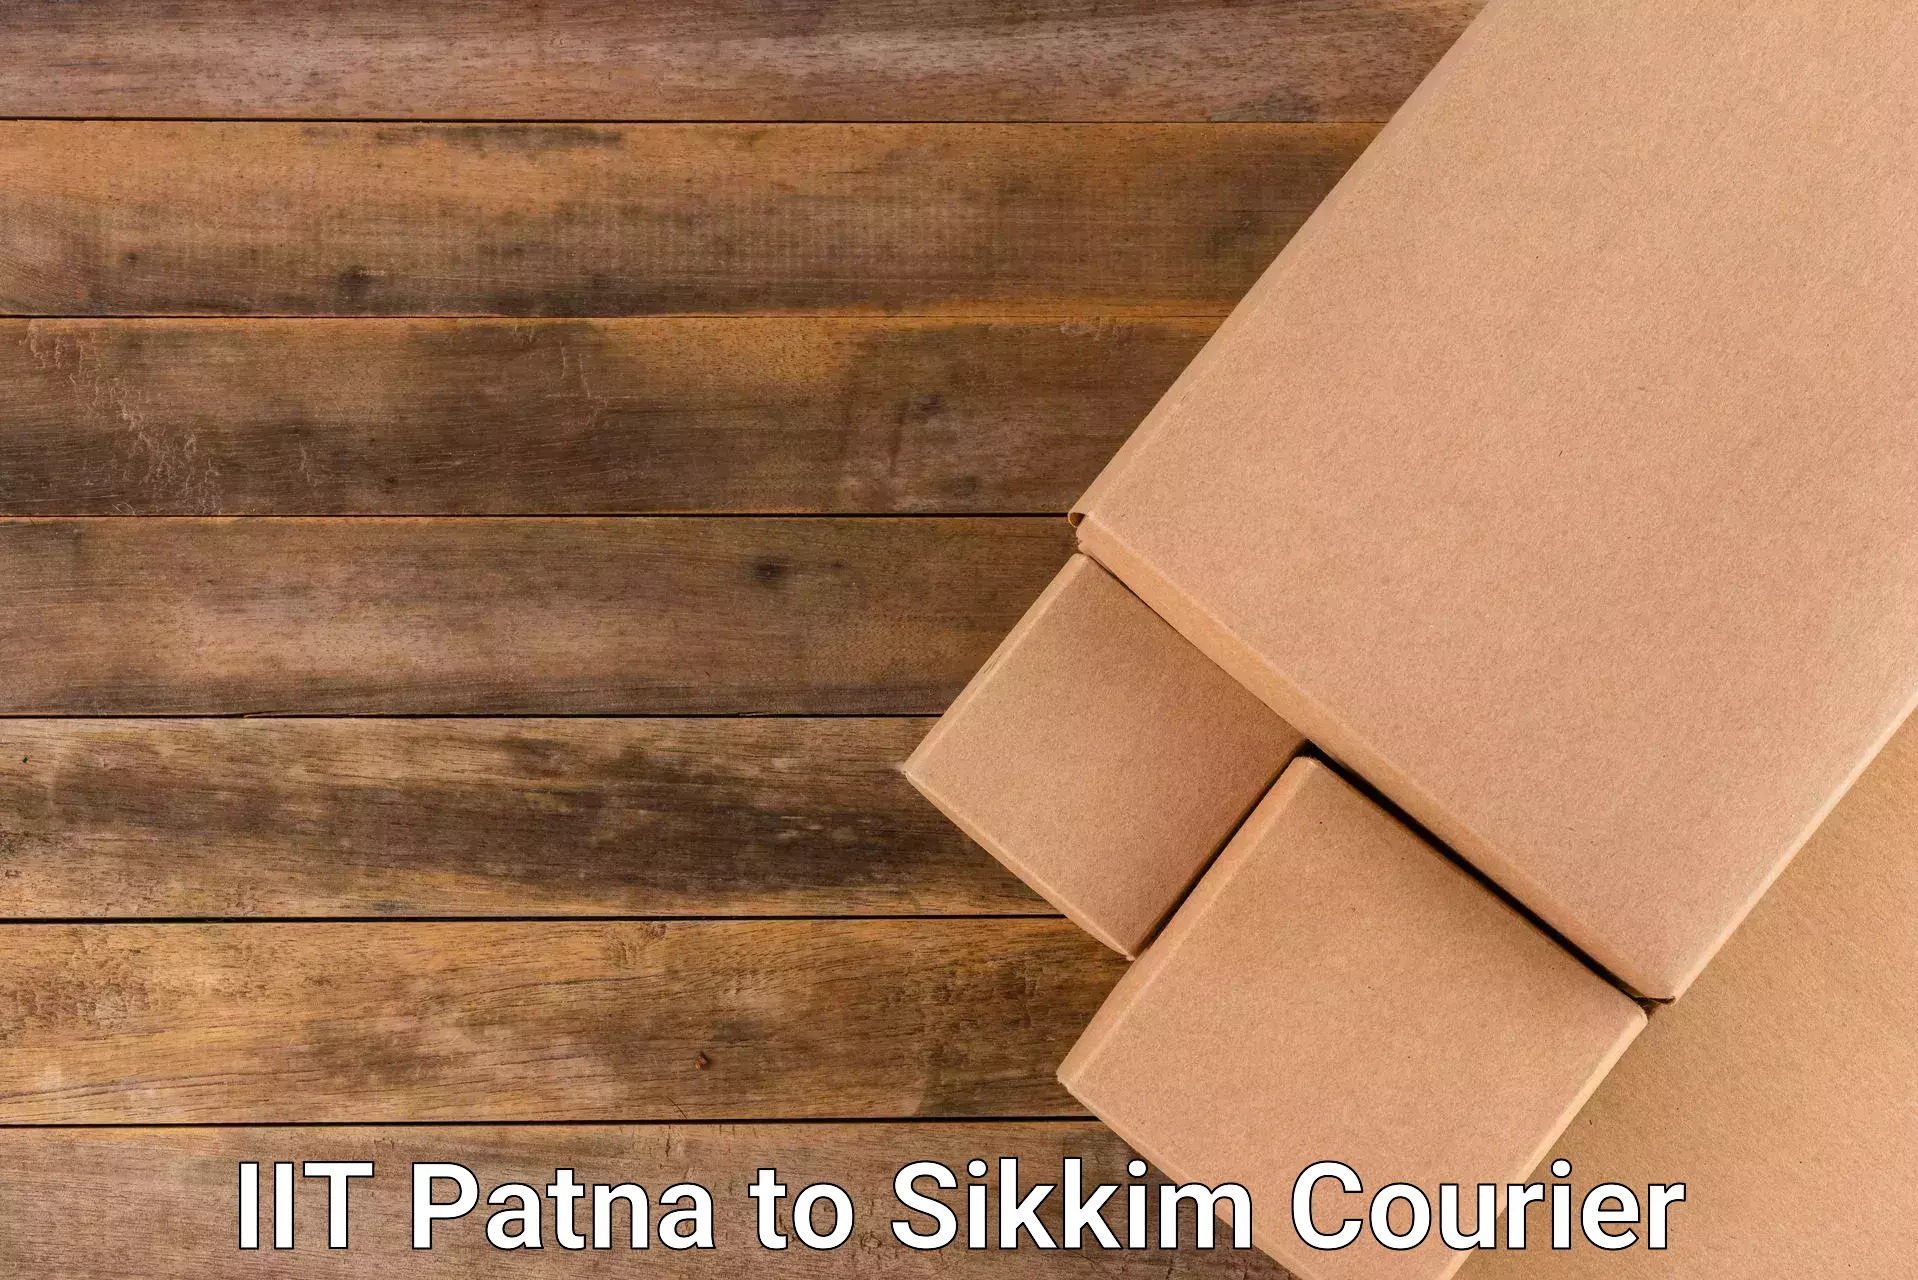 User-friendly courier app IIT Patna to Geyzing